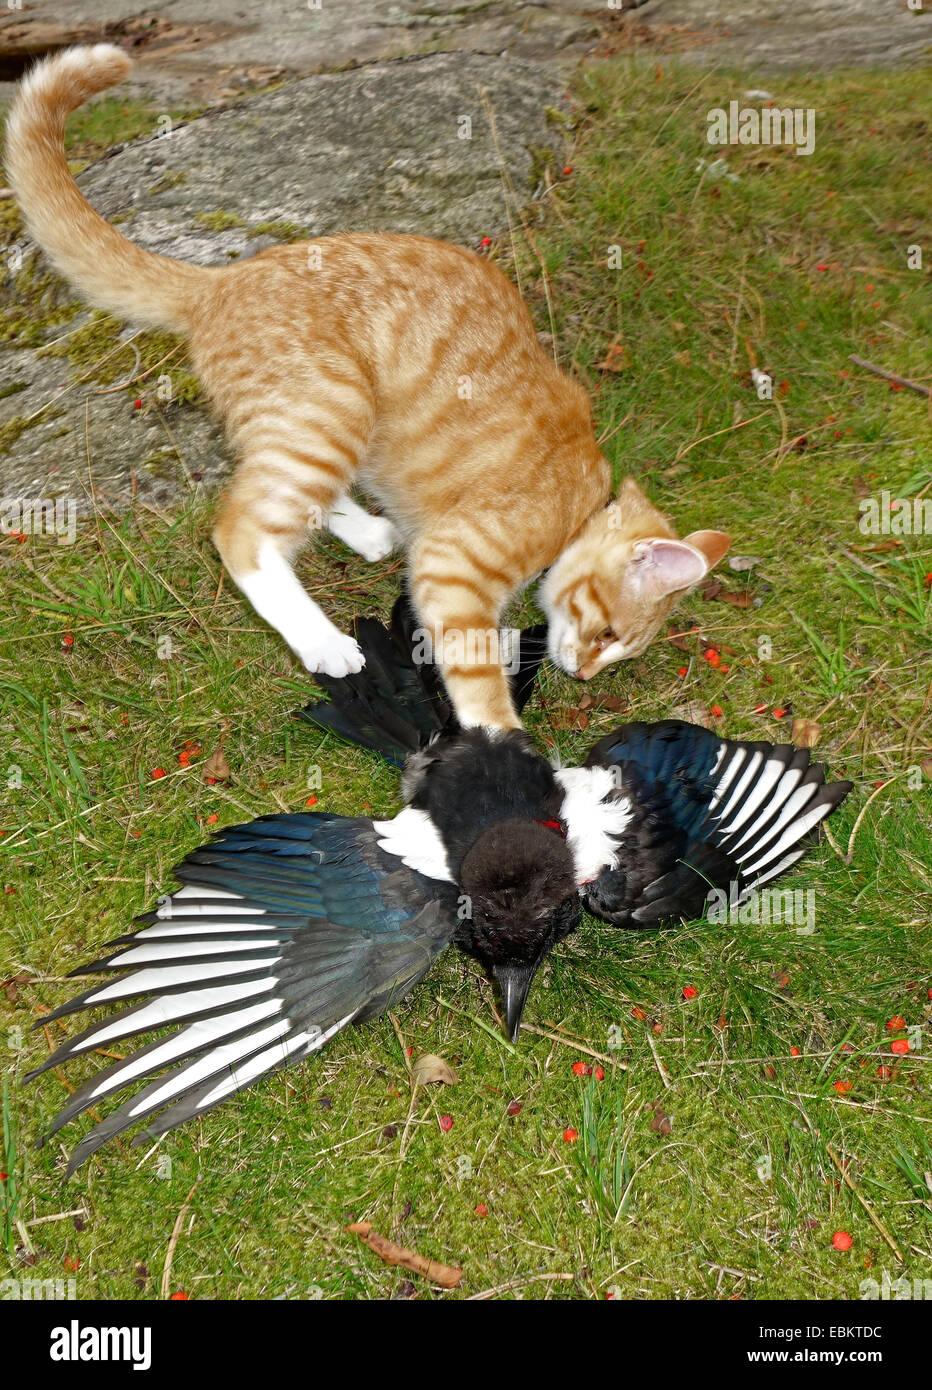 magpie-bird-tries-to-escape-from-a-cat-EBKTDC.jpg